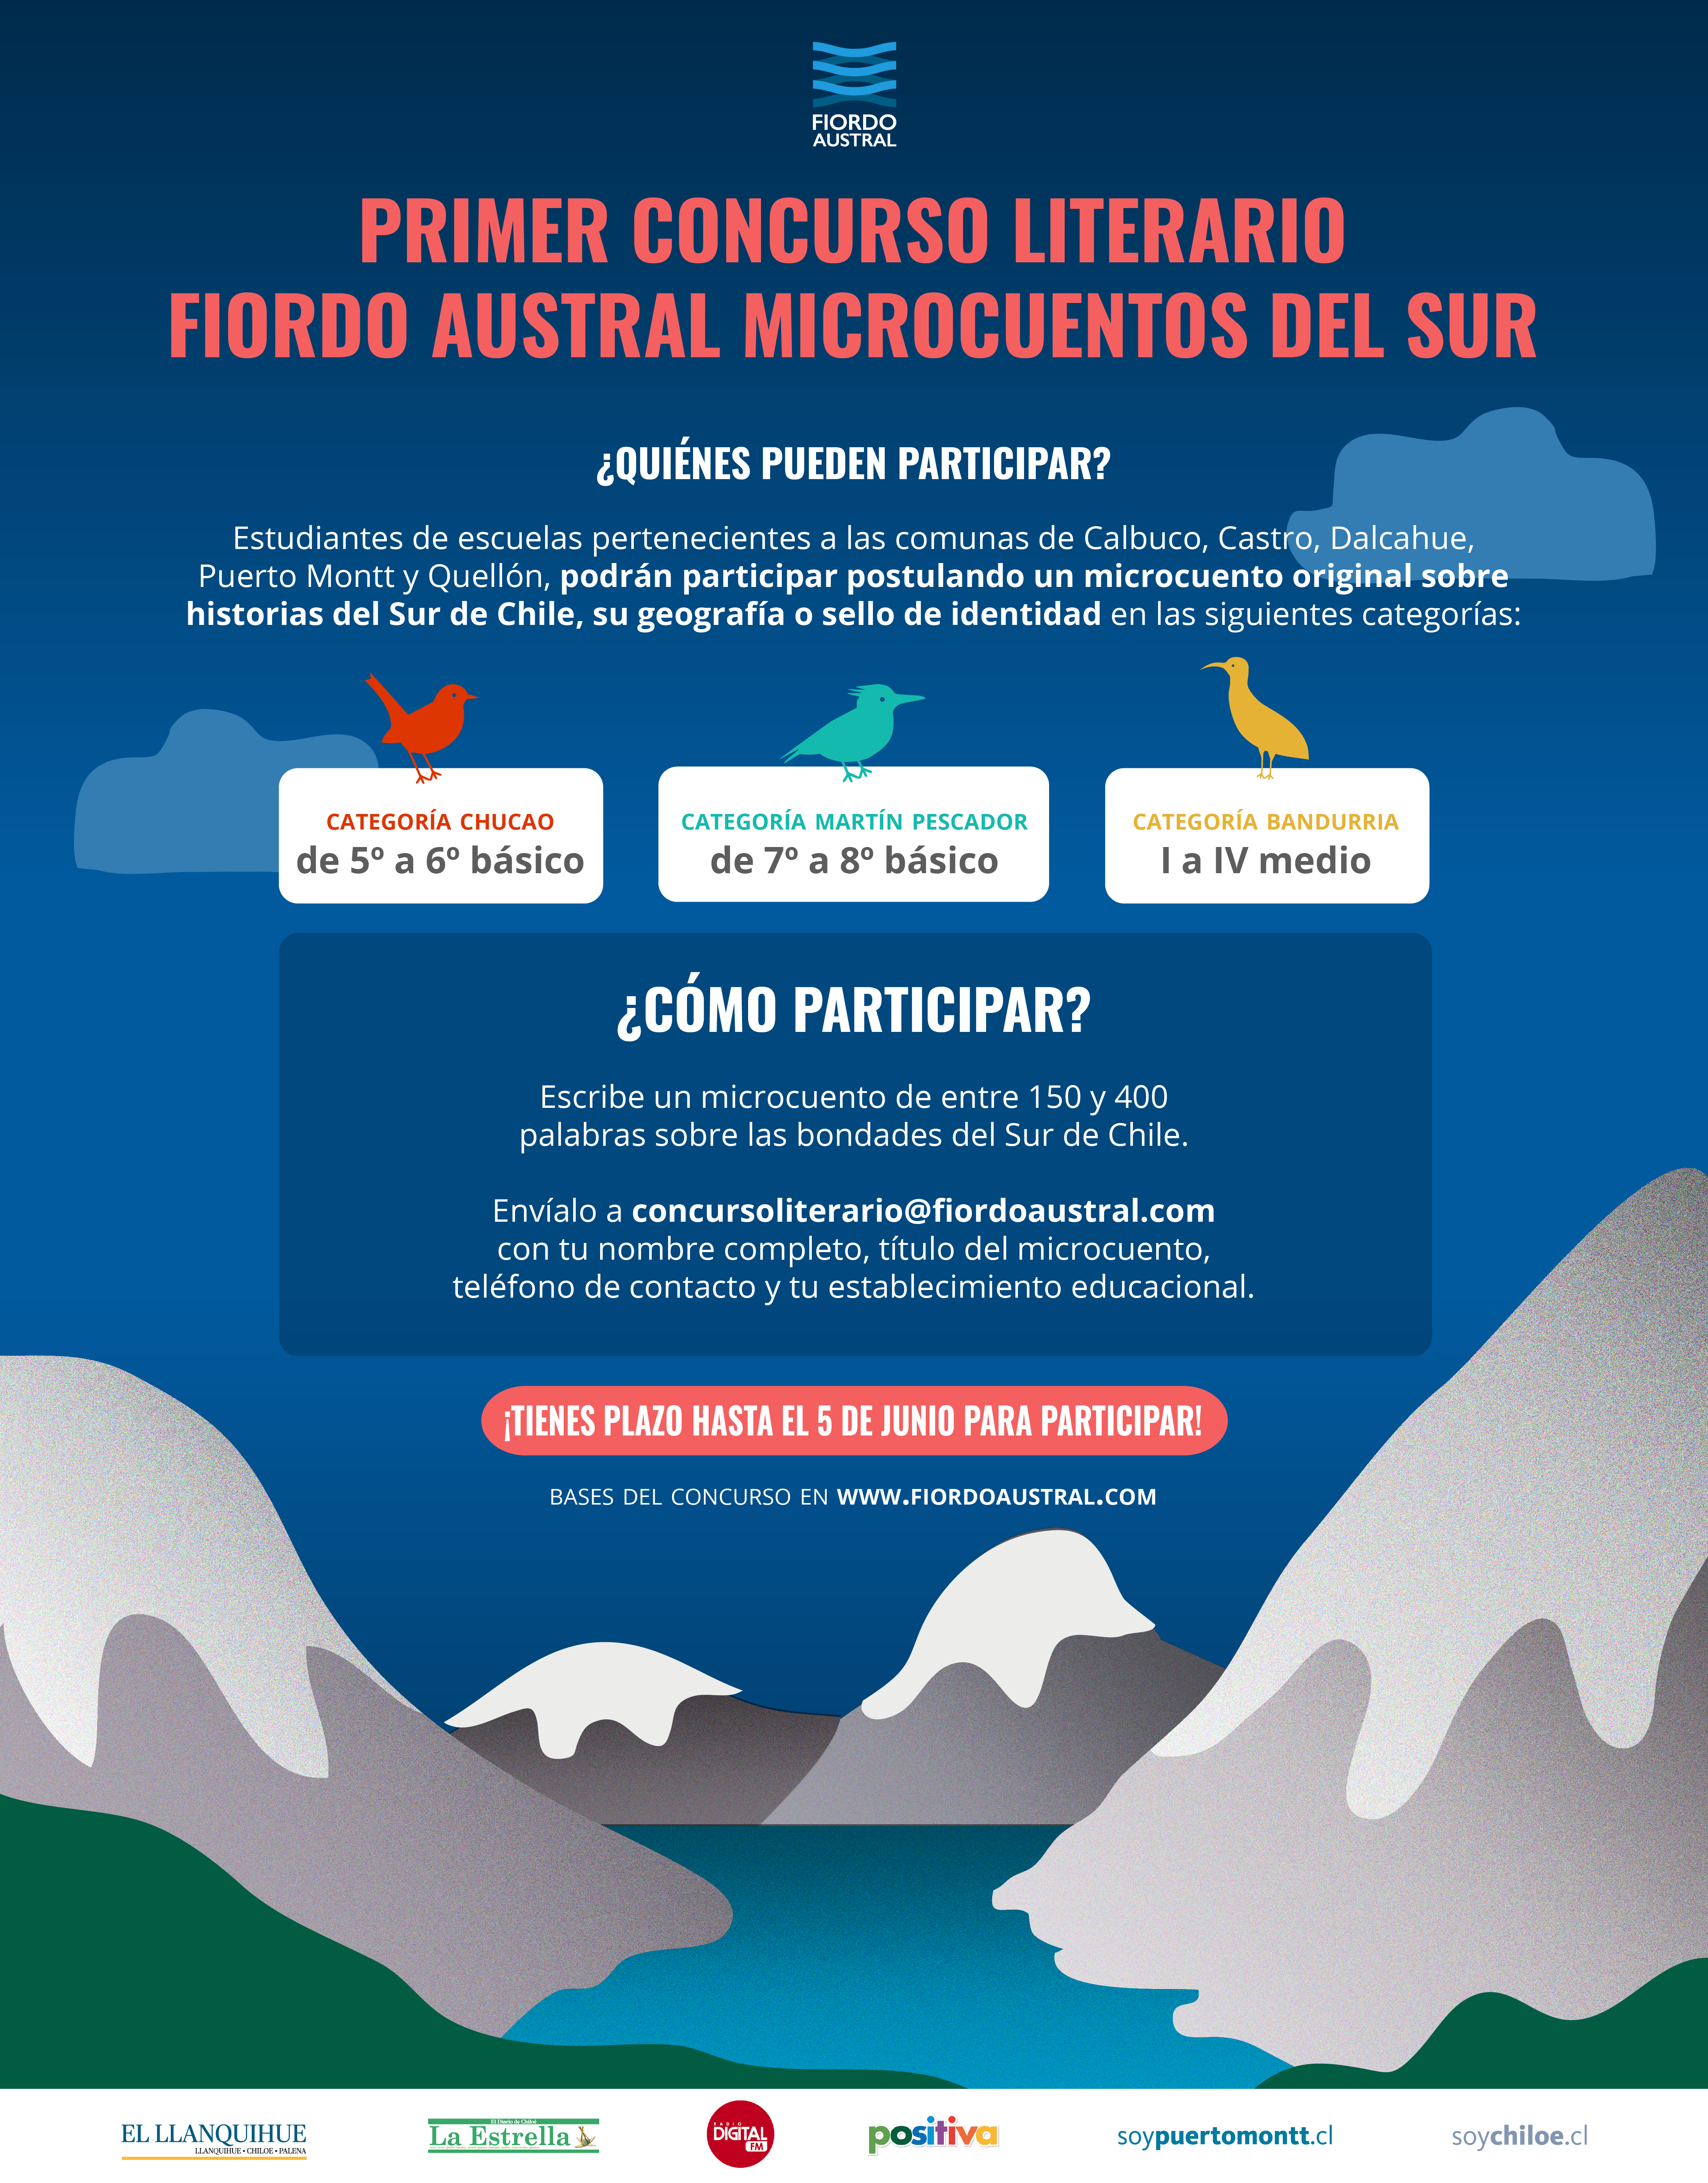 Fiordo Austral lanza primer concurso “Microcuentos del sur de Chile 2022”